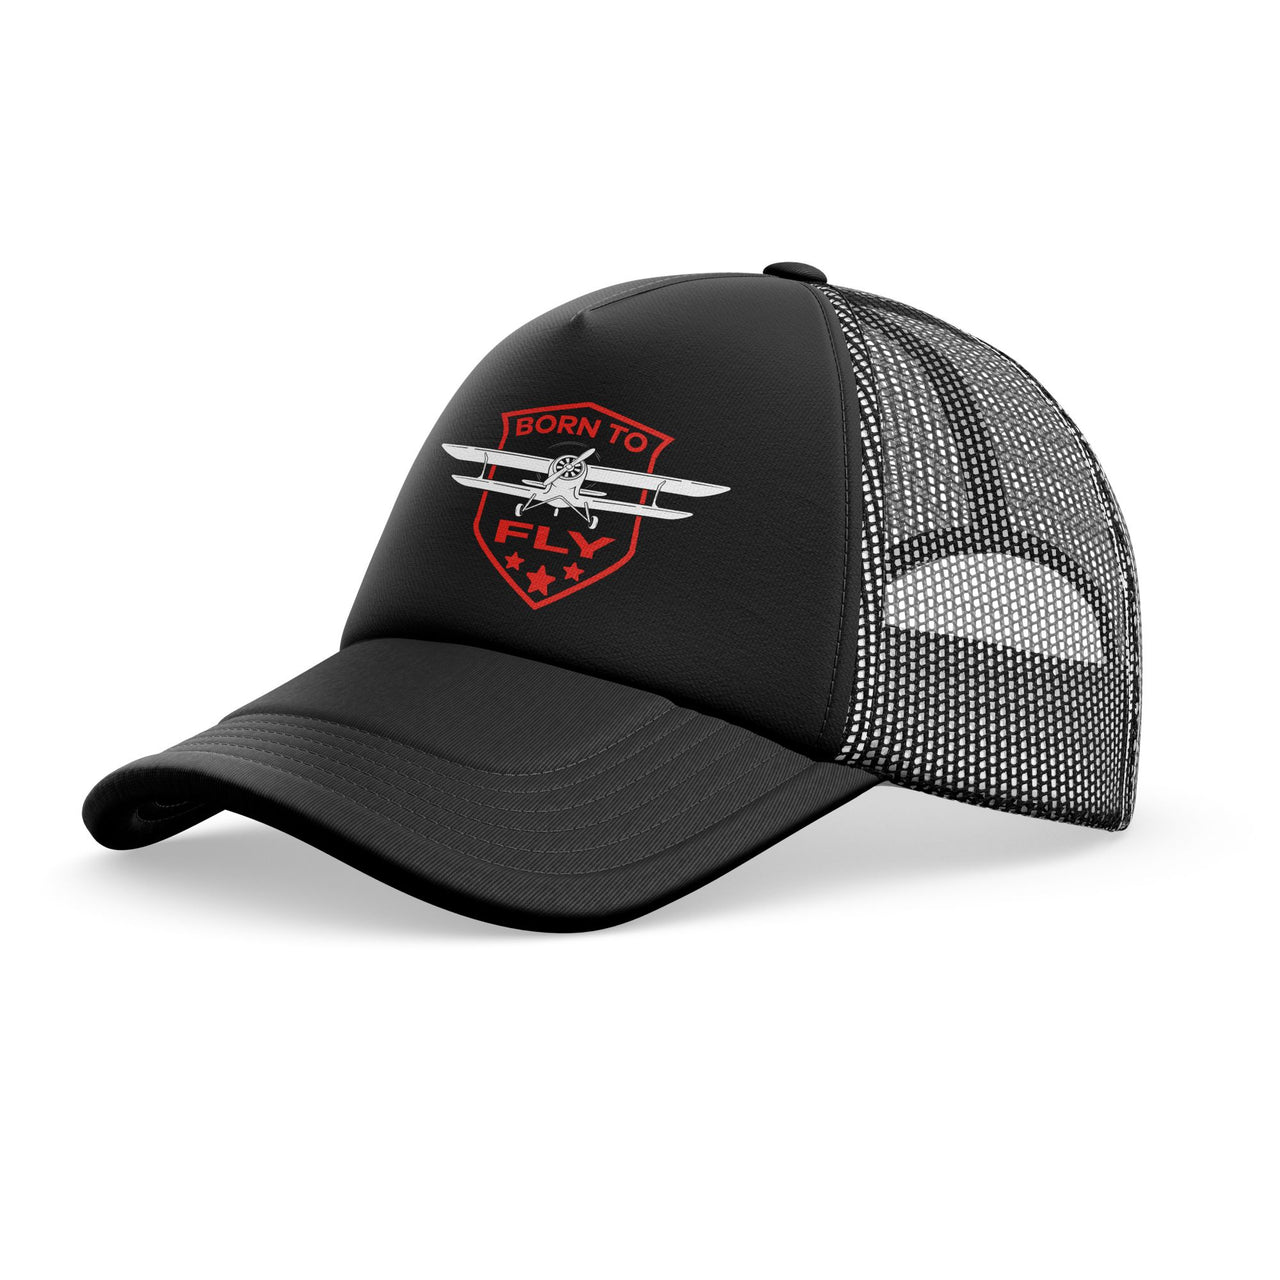 Super Born To Fly Designed Trucker Caps & Hats